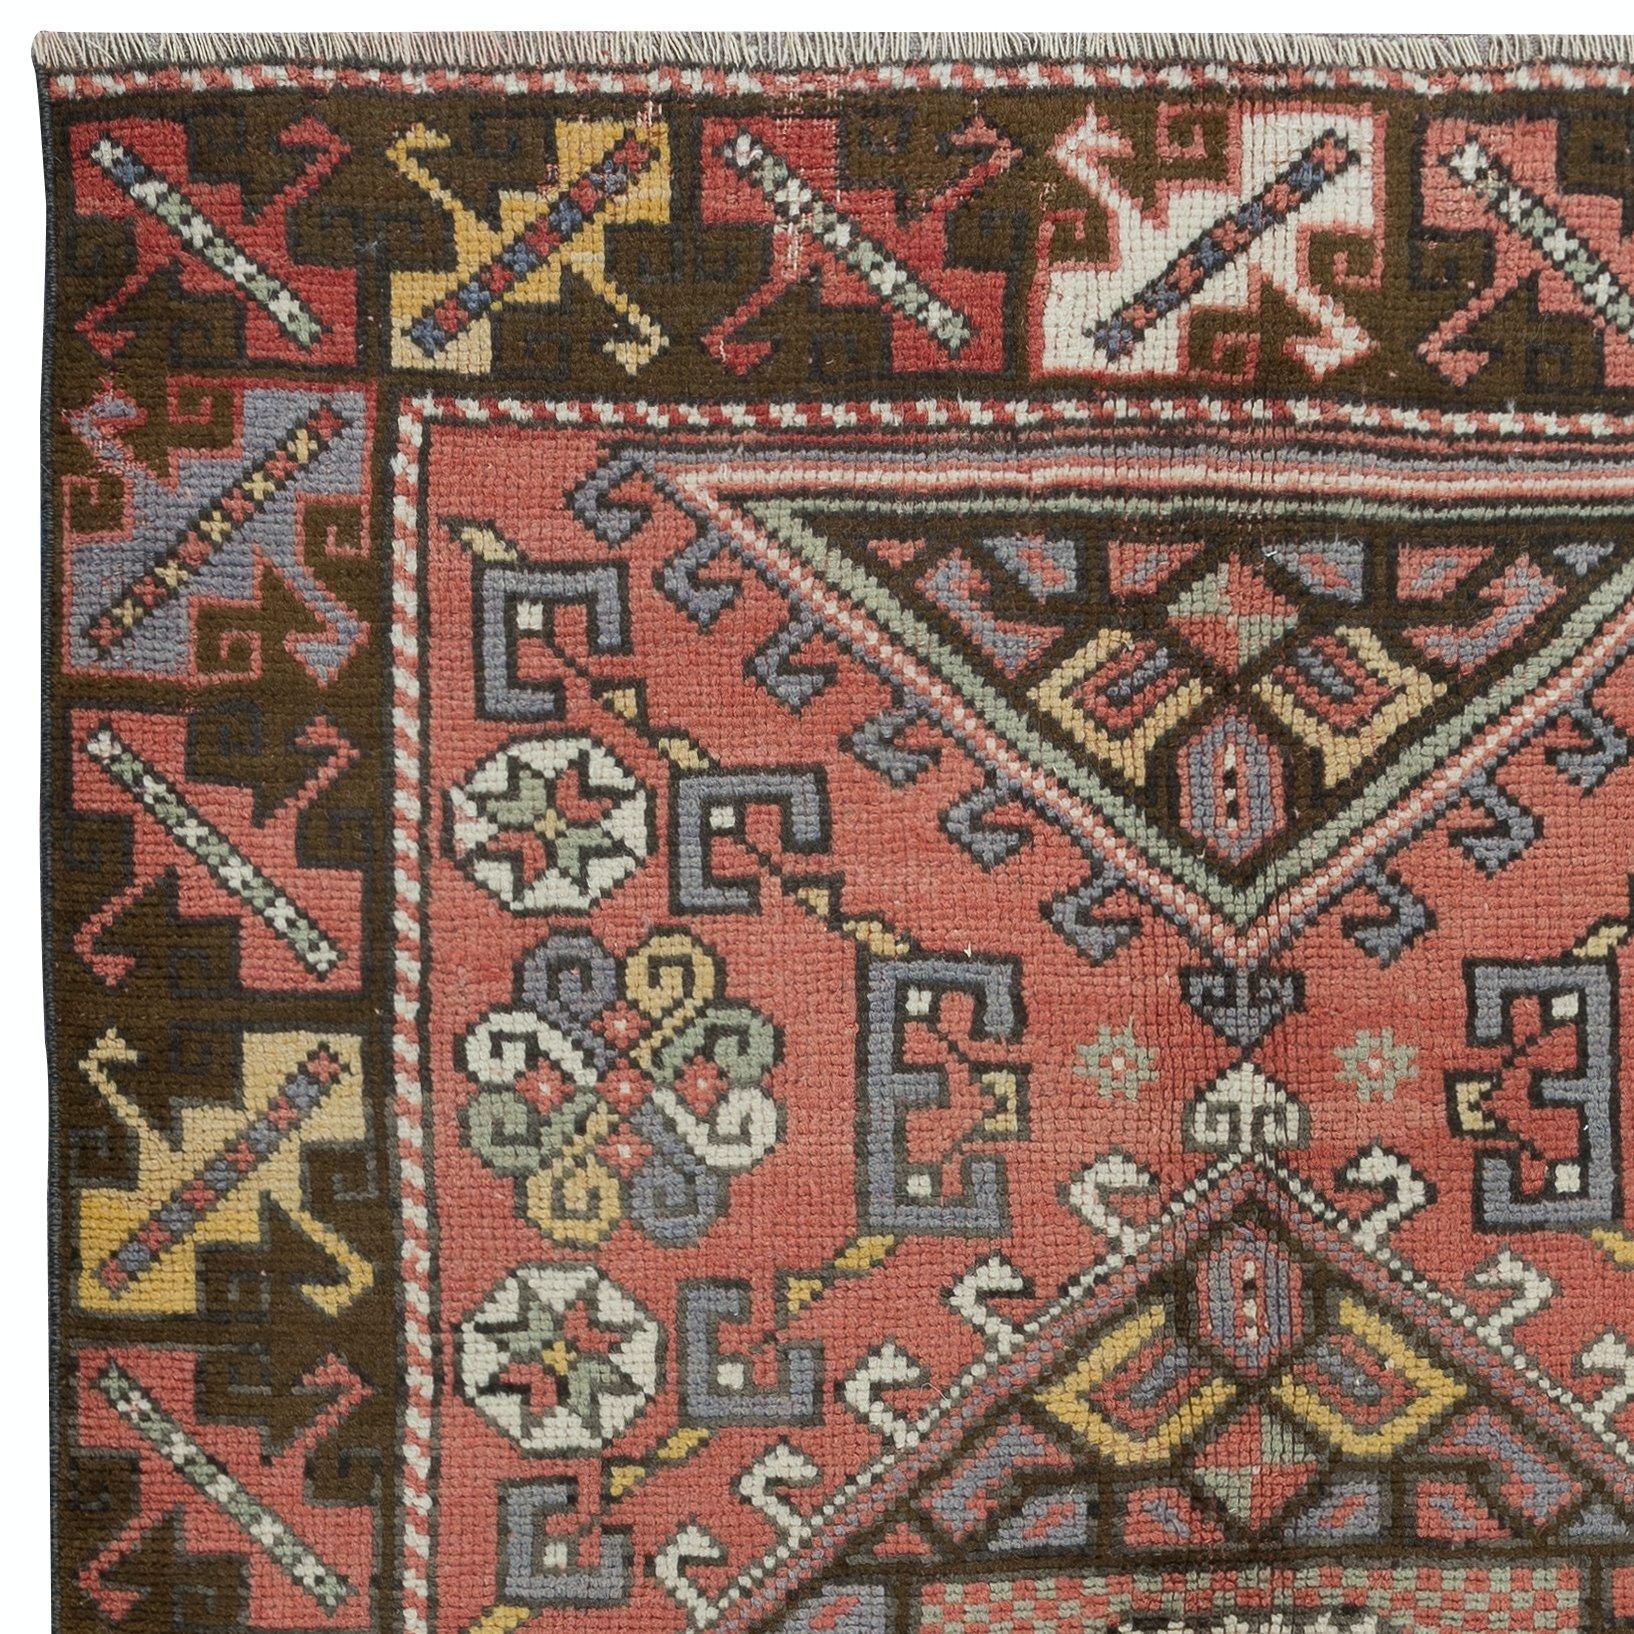 Hand-Knotted 4x5.7 Ft Handmade Geometric Medallion Design Rug, Vintage Turkish Red Carpet For Sale